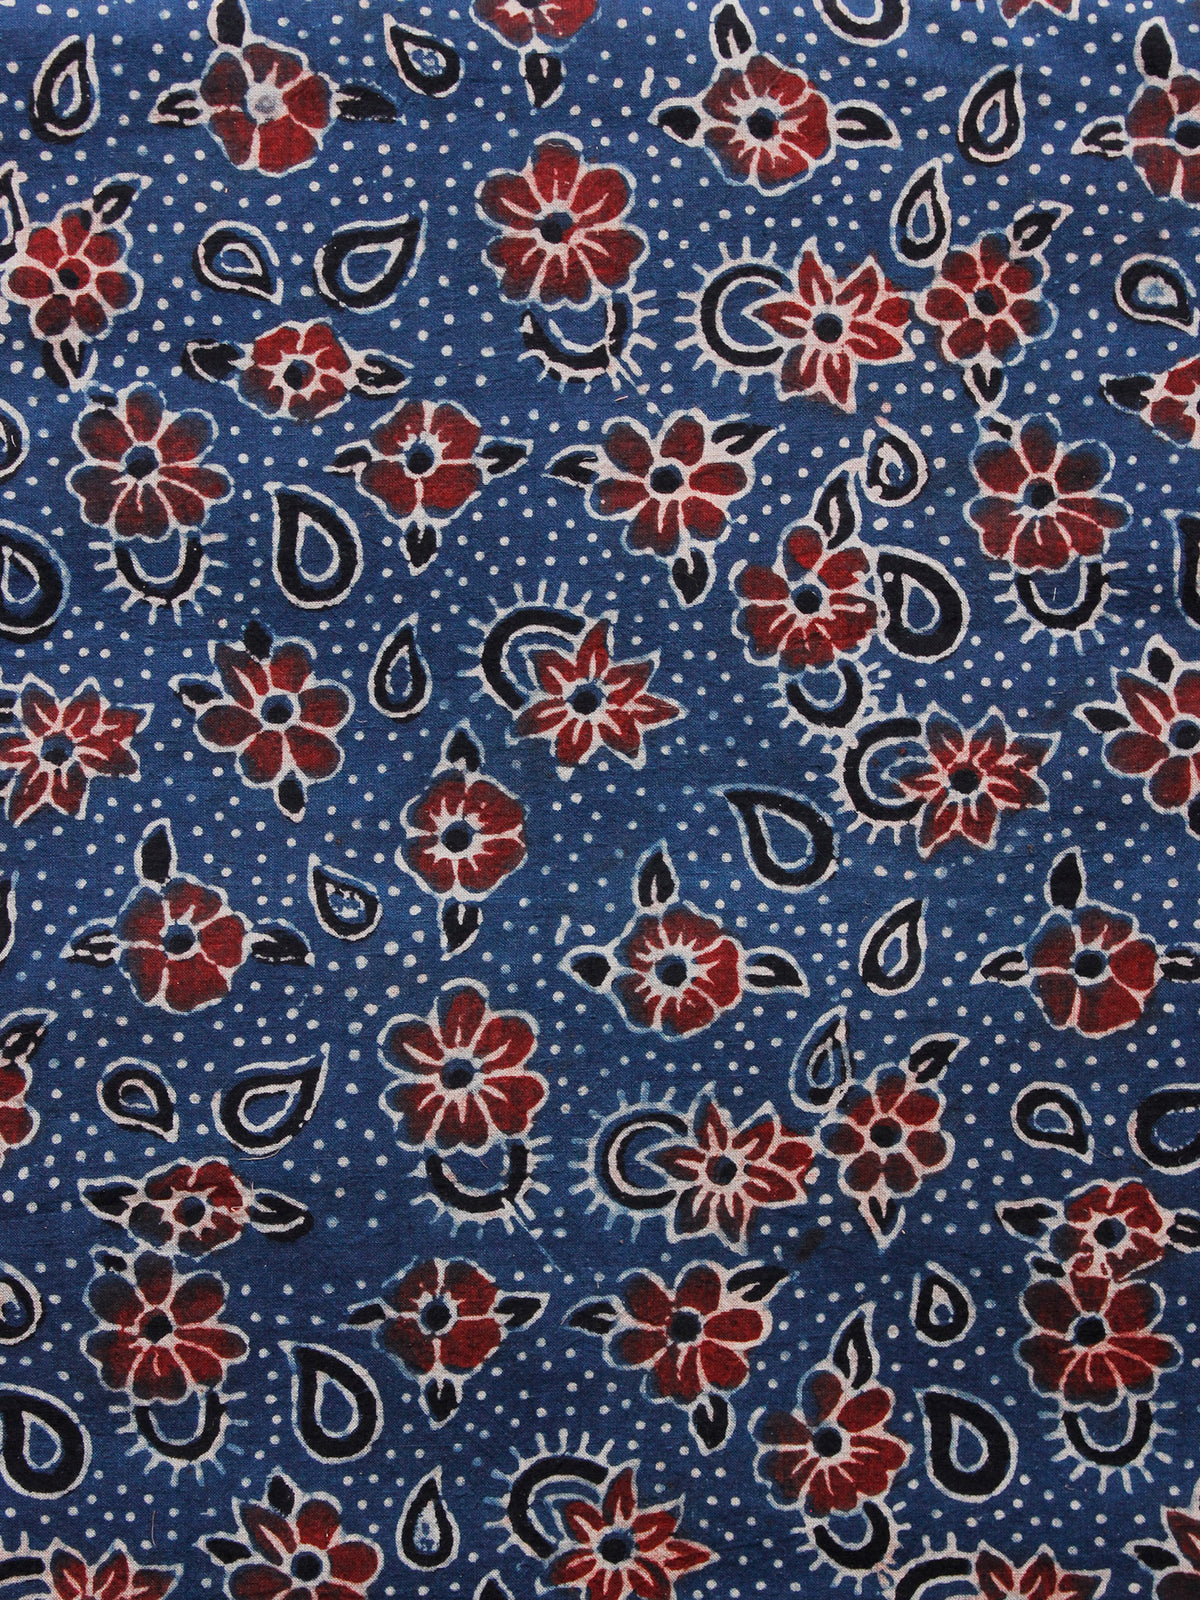 Indigo Red Black Ivory Ajrakh Hand Block Printed Cotton Fabric Per Meter - F003F1576